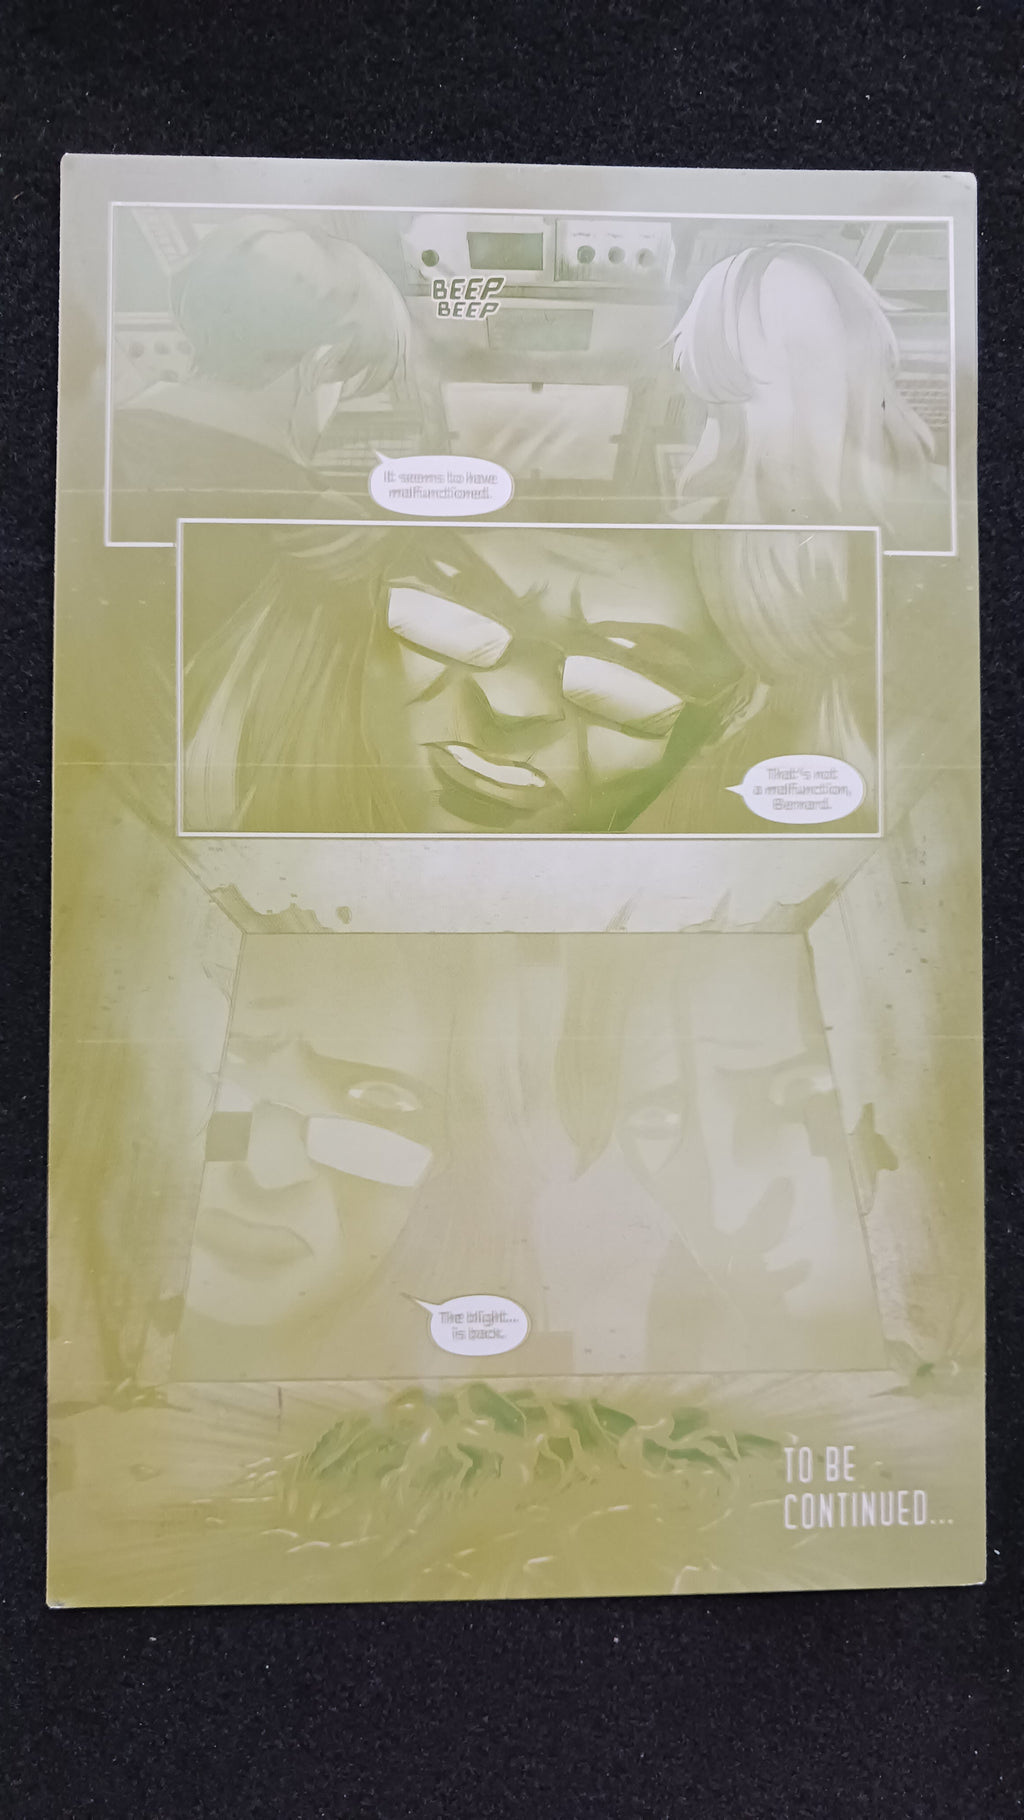 Darkland #3 - Page 26 - PRESSWORKS - Comic Art - Printer Plate - Yellow